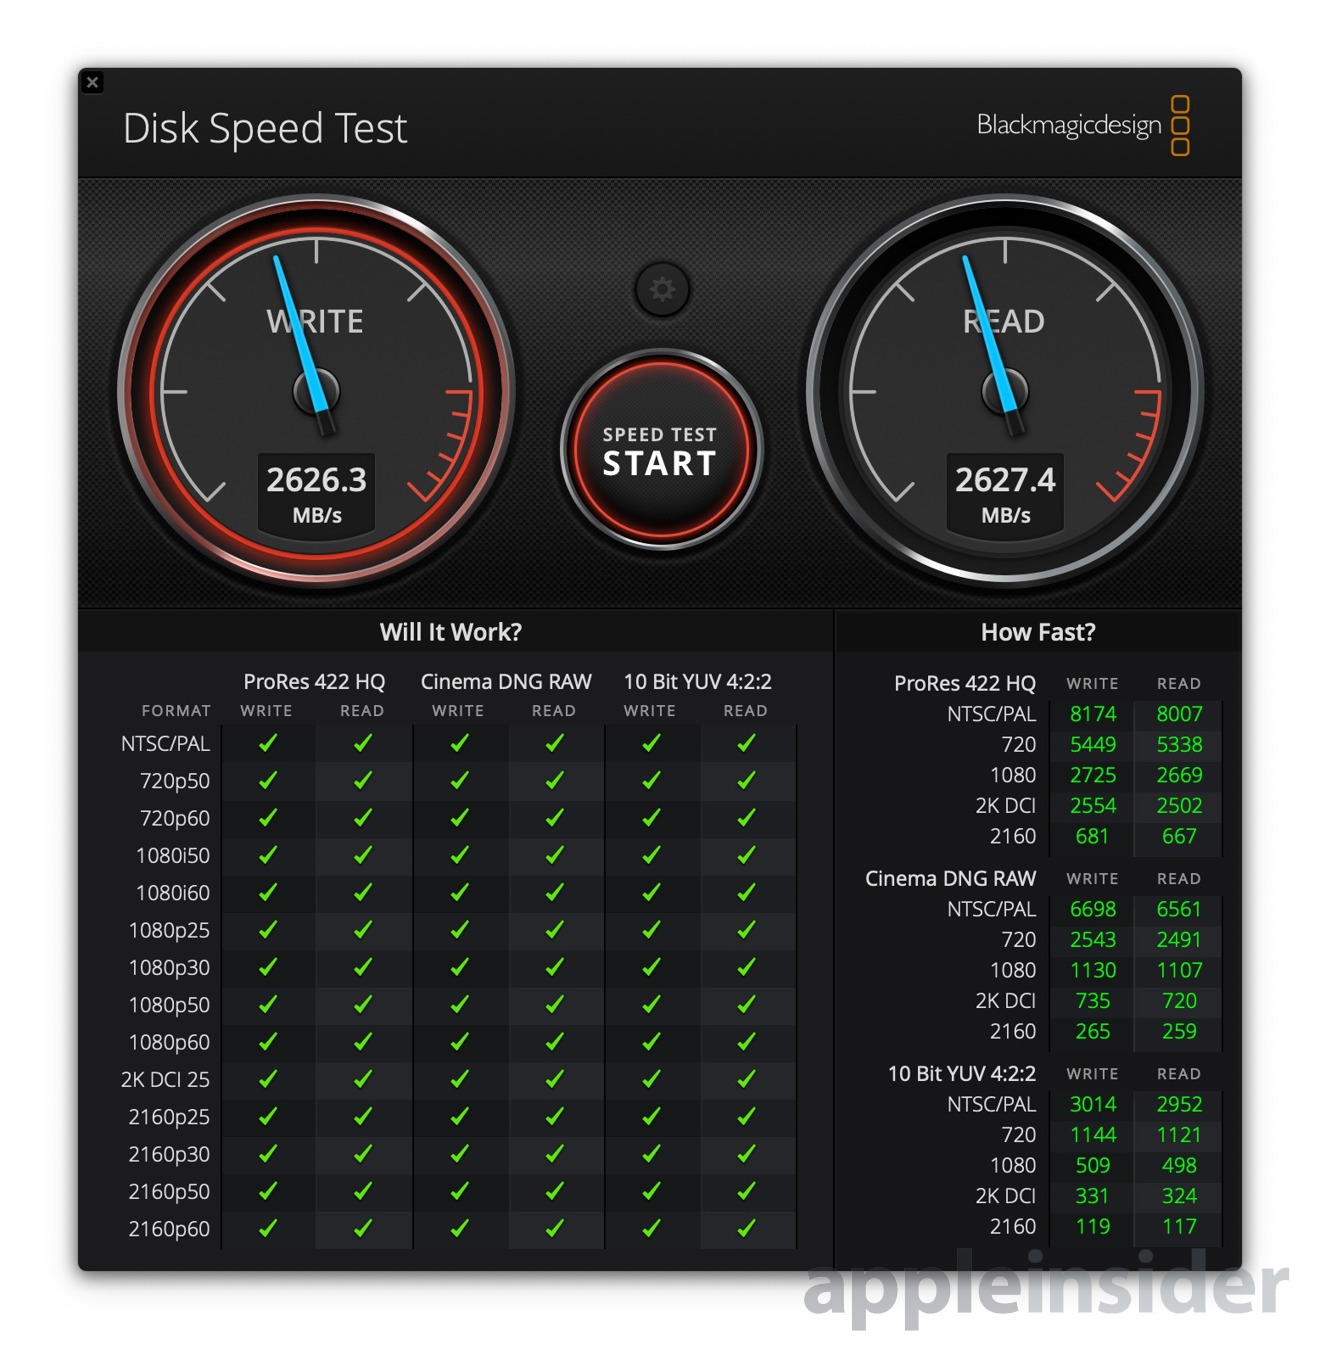 2019 MacBook Pro Blackmagic Disk Speed Test results